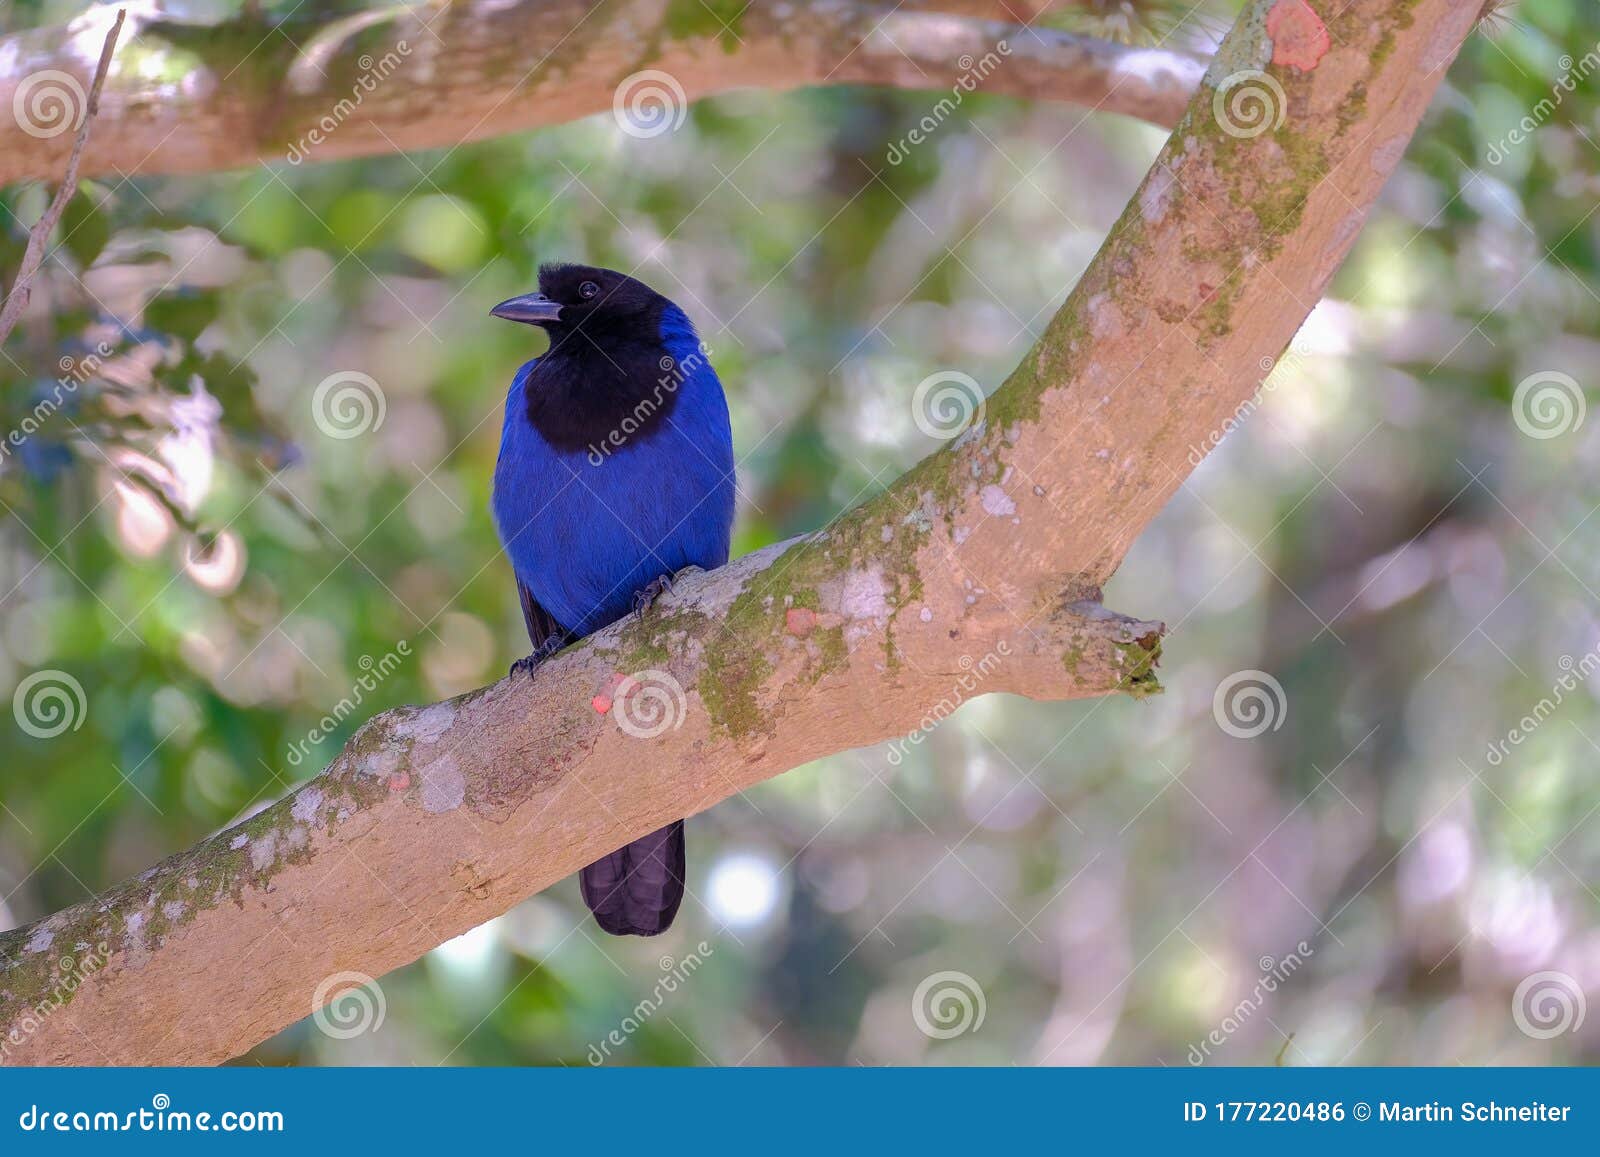 azure jay, gralha azul or blue jackdaw bird, cyanocorax caeruleus, parque estadual rio vermelho, florianopolis, brazil